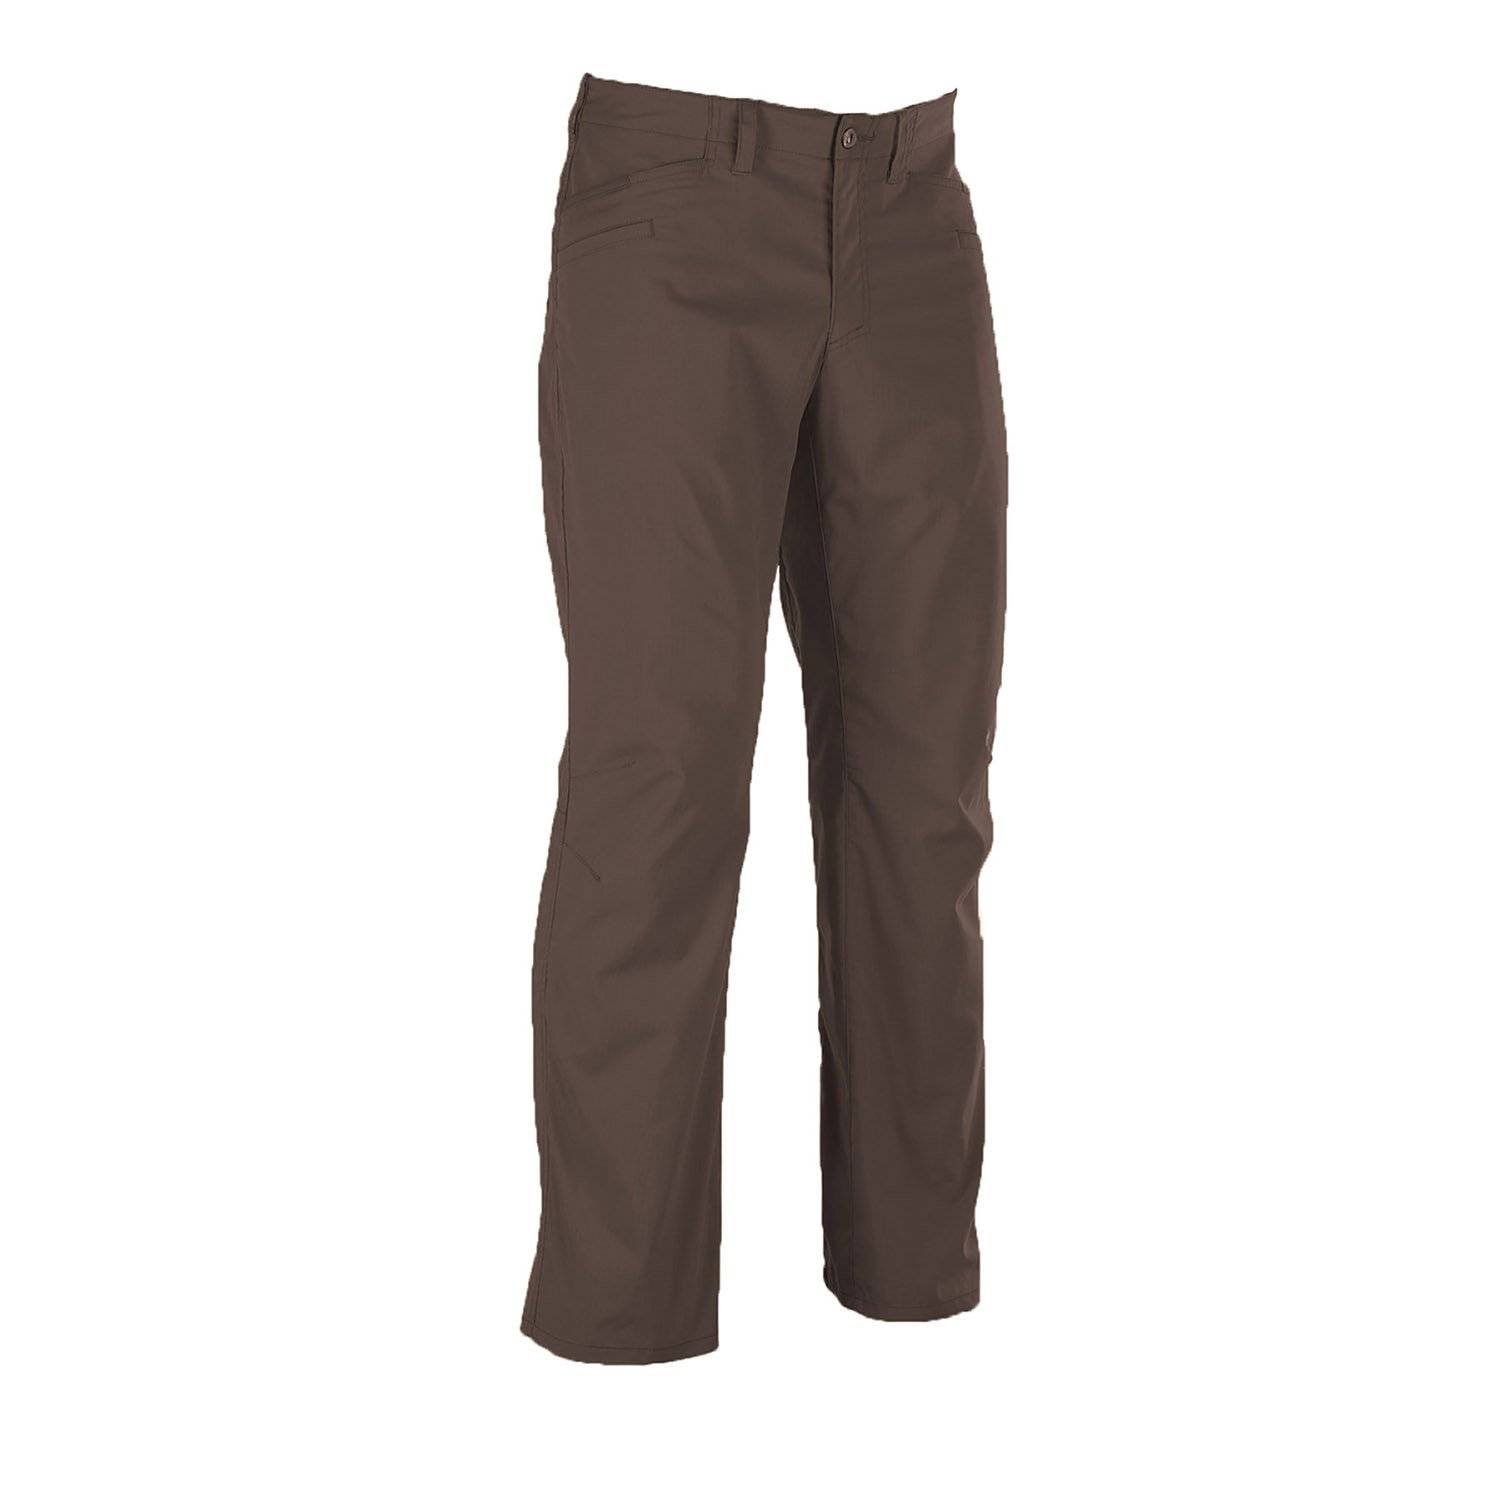 5.11 Tactical Ridgeline Pants